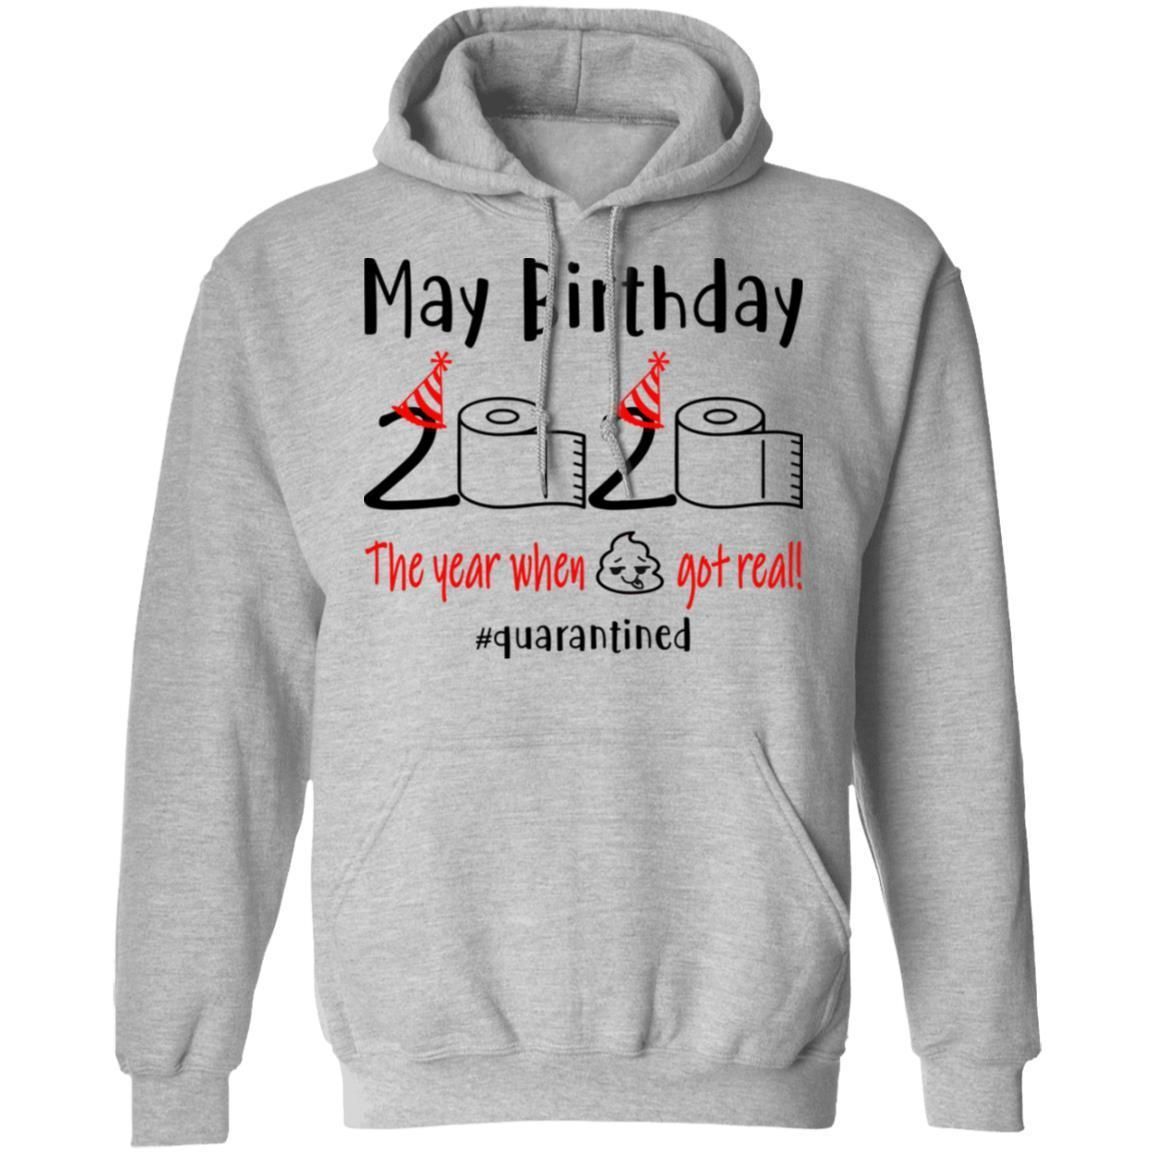 May Birthday 2020 Quarantined The Year When Shit Got Real shirts